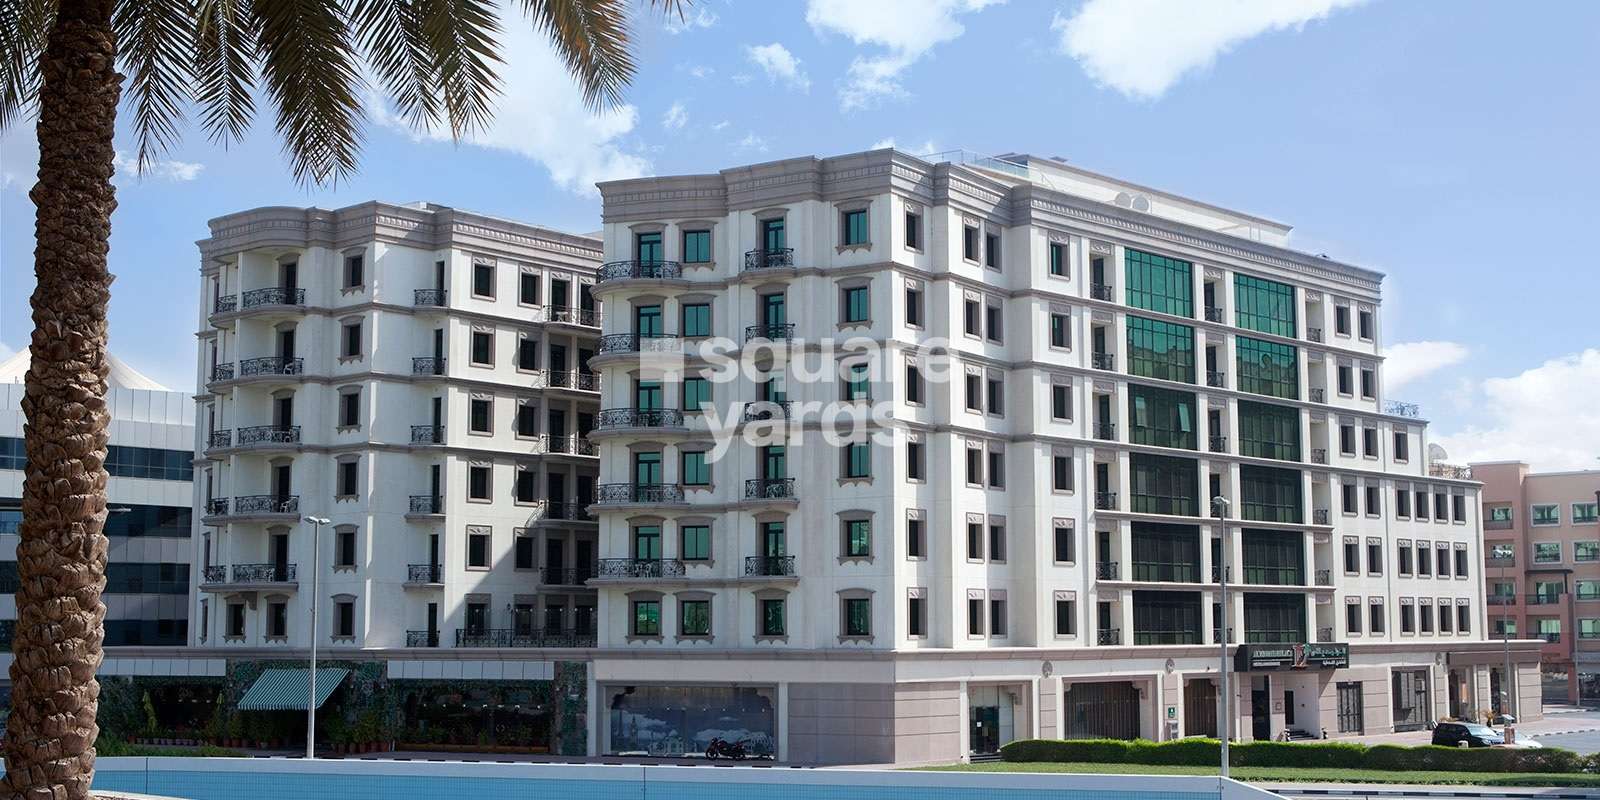 Al Waleed Palace Hotel Apartment Al Barsha Cover Image